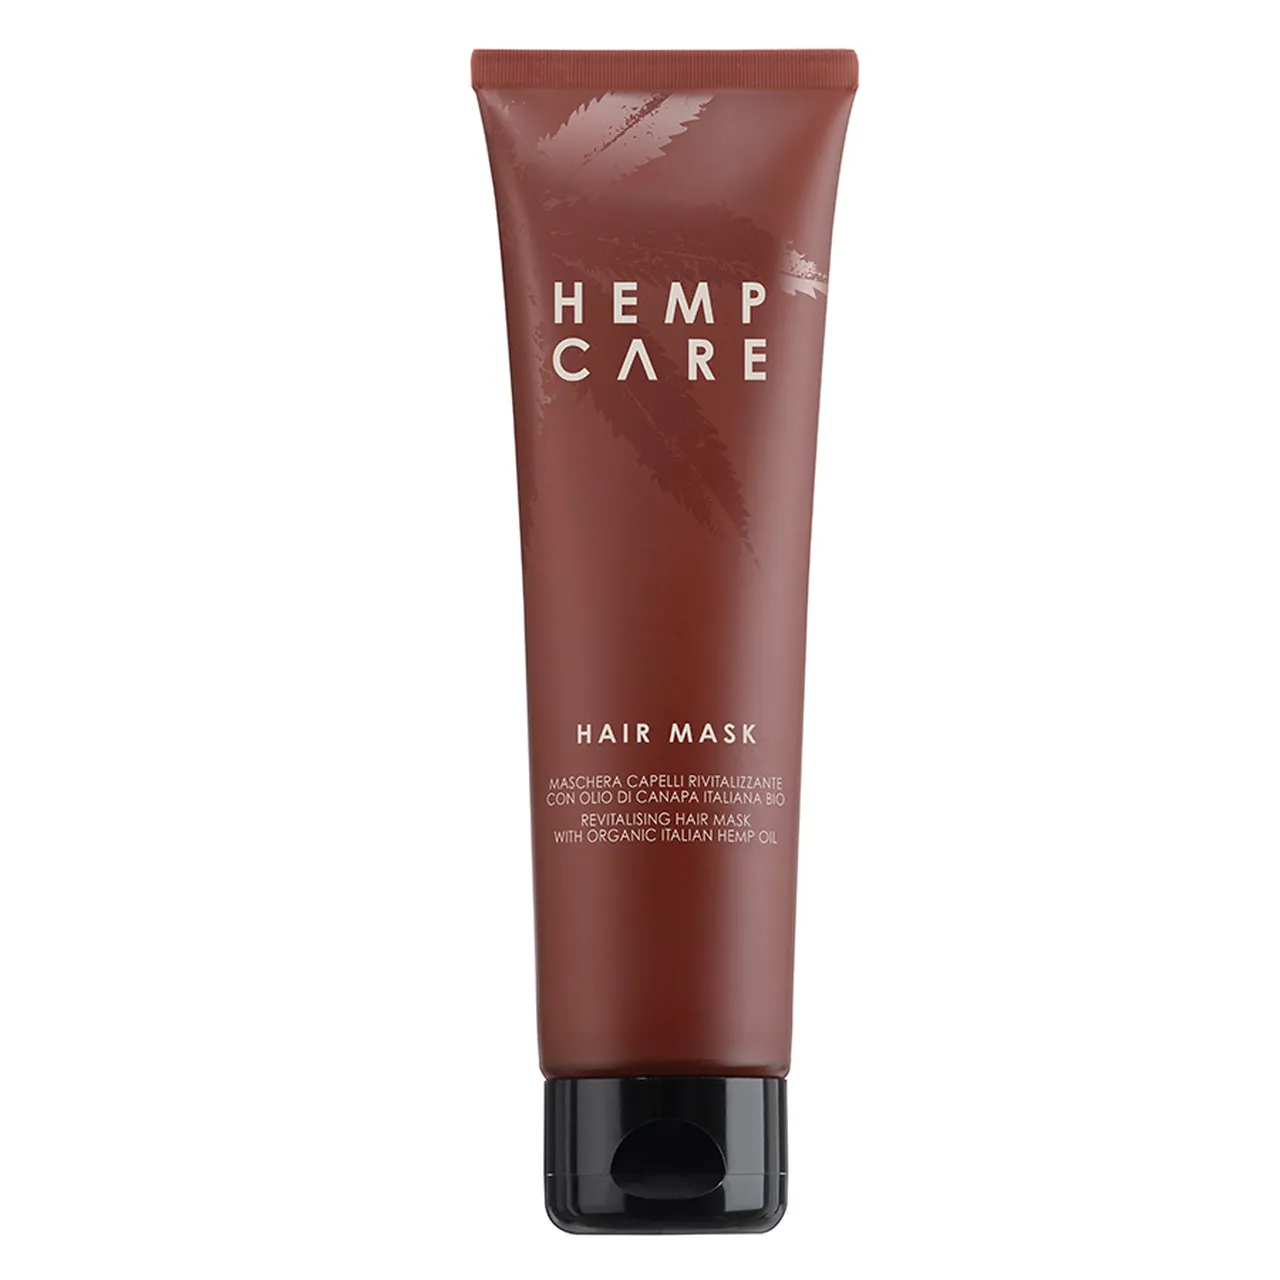 Hemp Care, maska do włosów, 150 ml